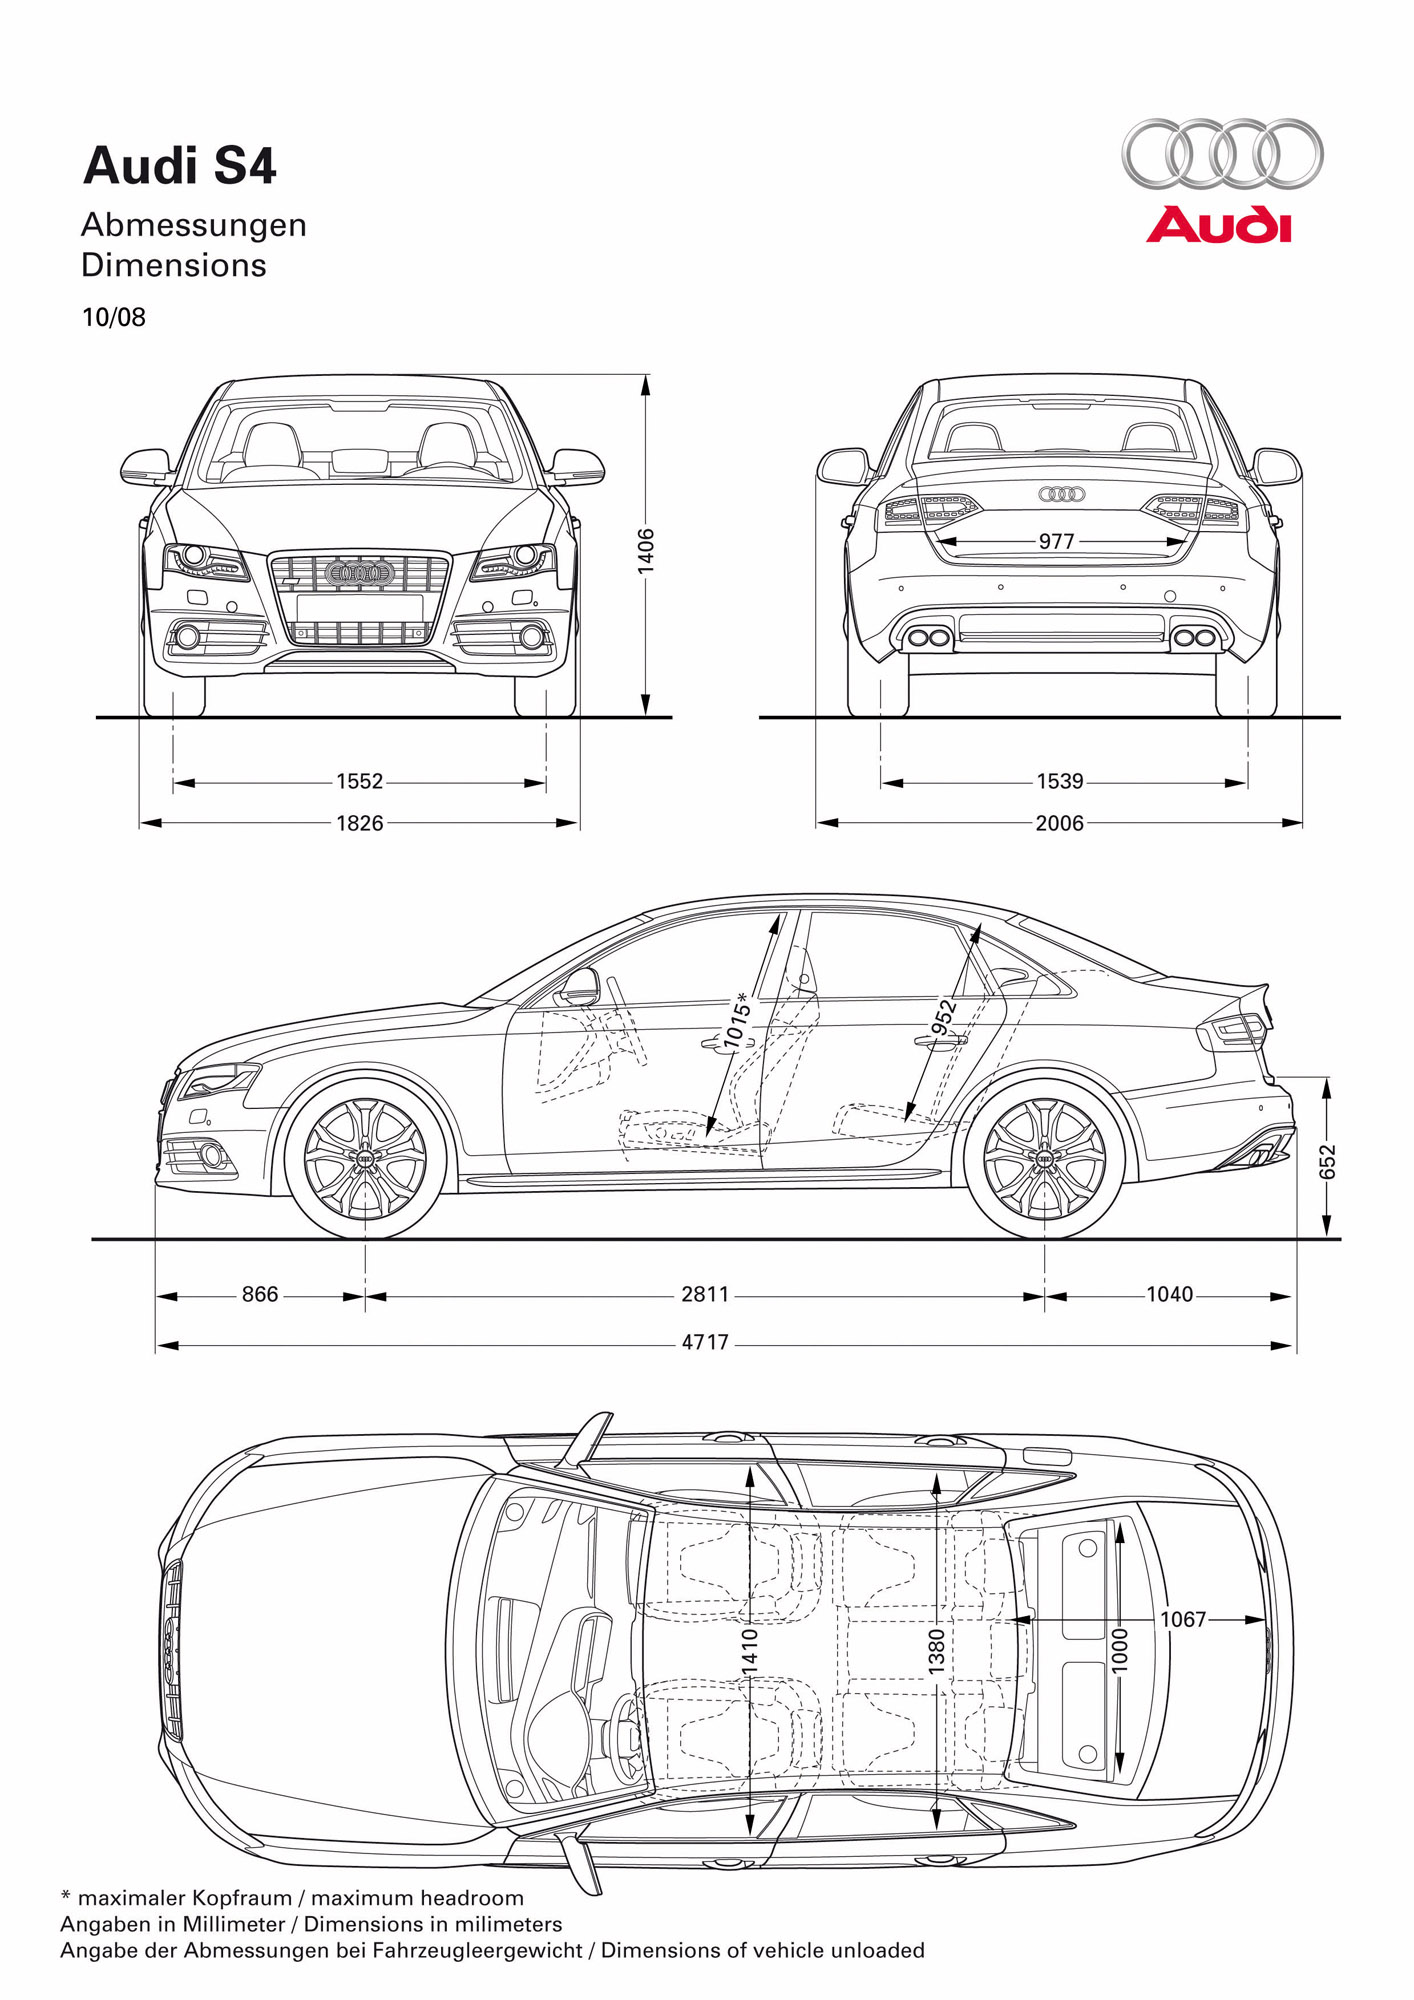 Audi S4 and S4 Avant